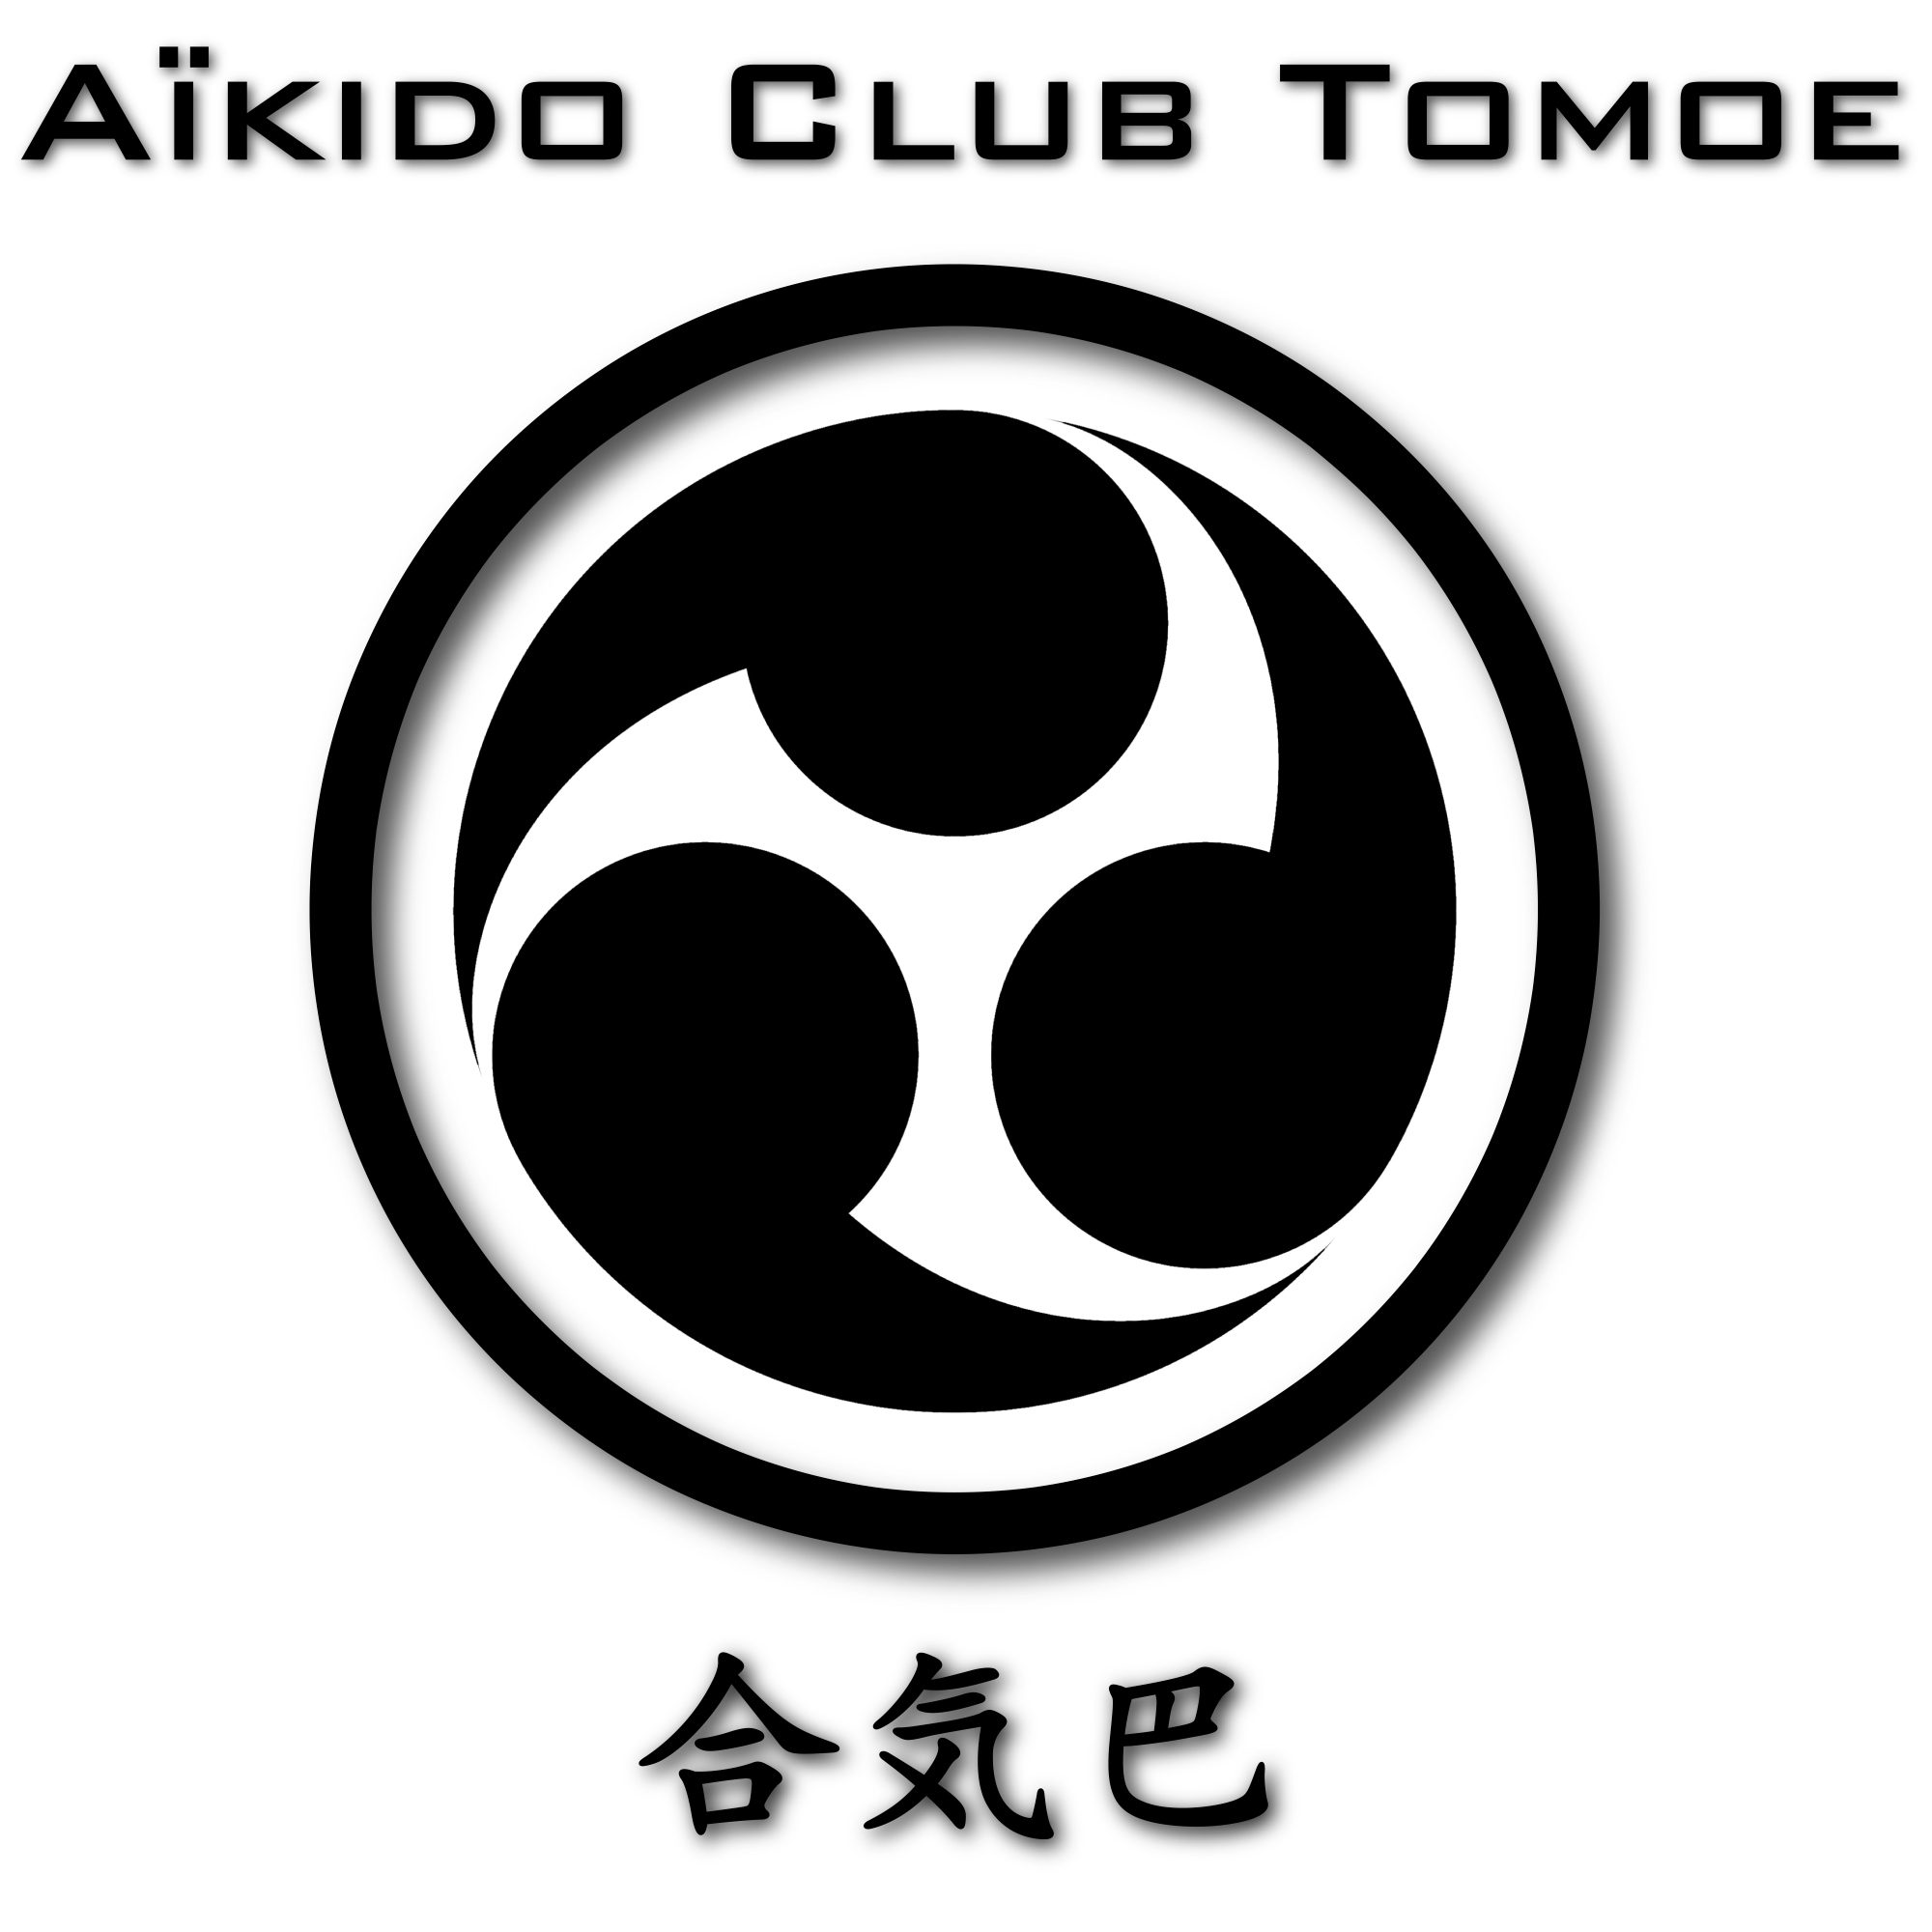 AIKIDO CLUB TOMOE